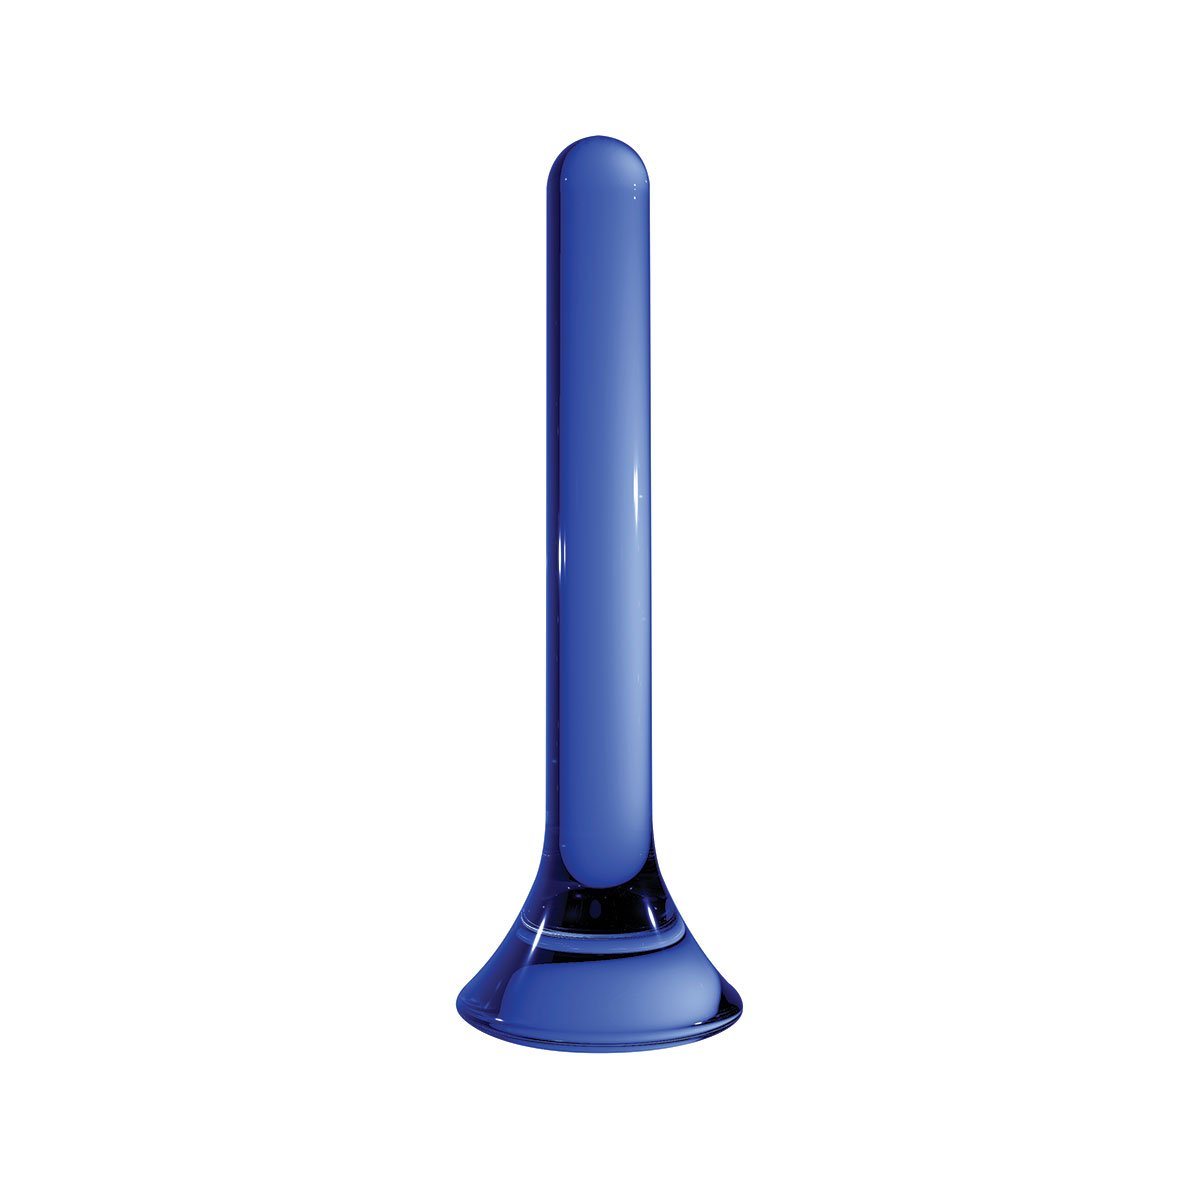 Chrystalino Tower Blue Glass Rod Wand Dildo - Hamilton Park Electronics